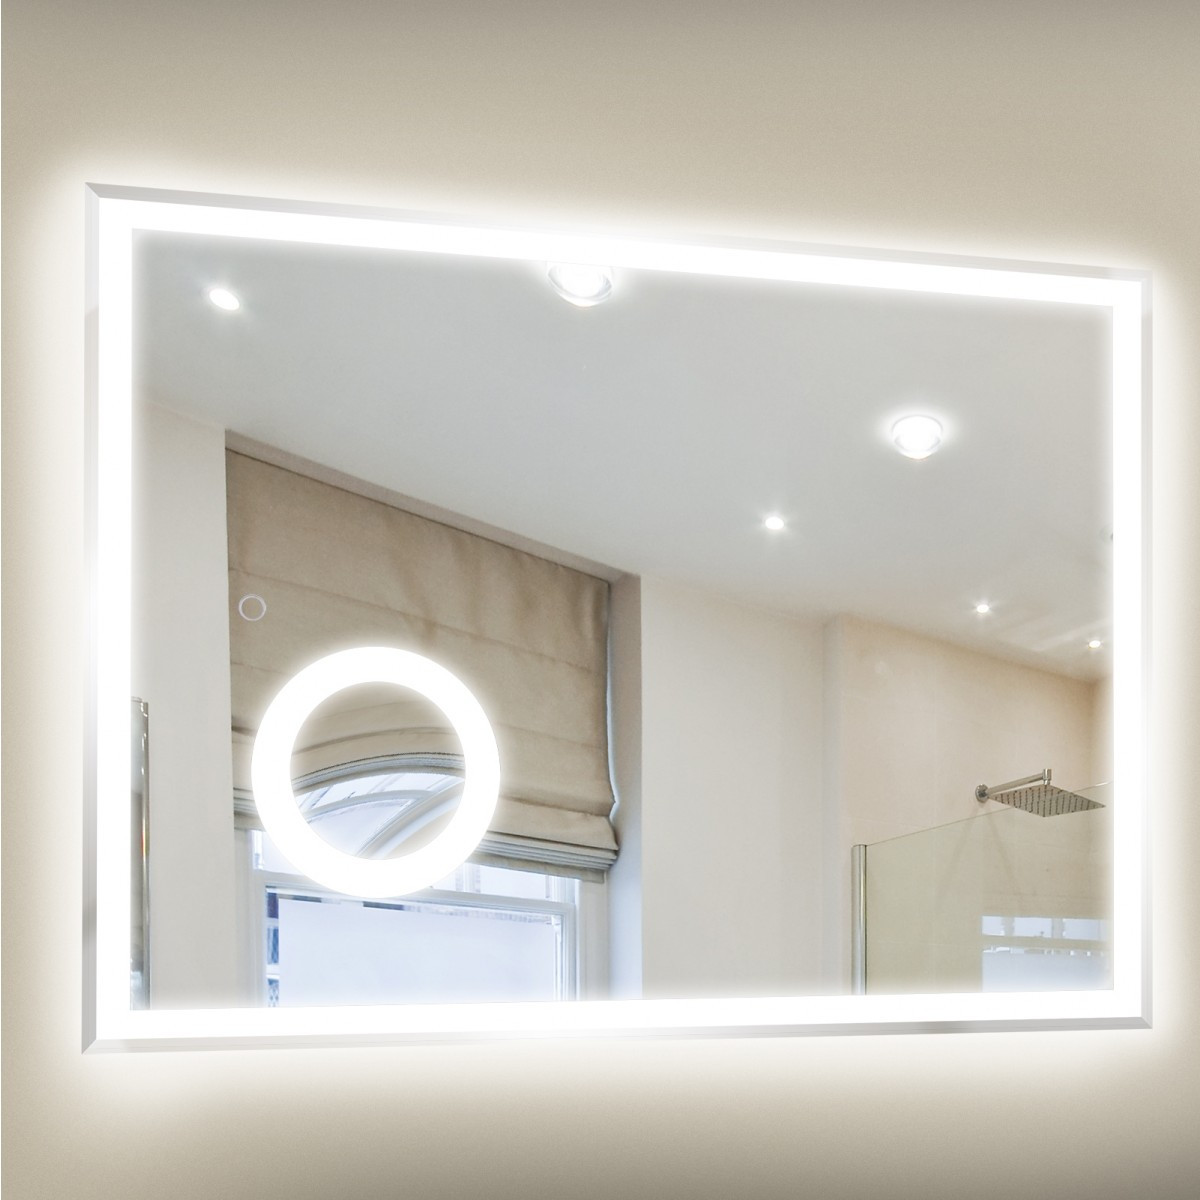 Magnifying Bathroom Mirrors
 Kleankin 800 x 600mm Illuminated LED Magnifying Bathroom